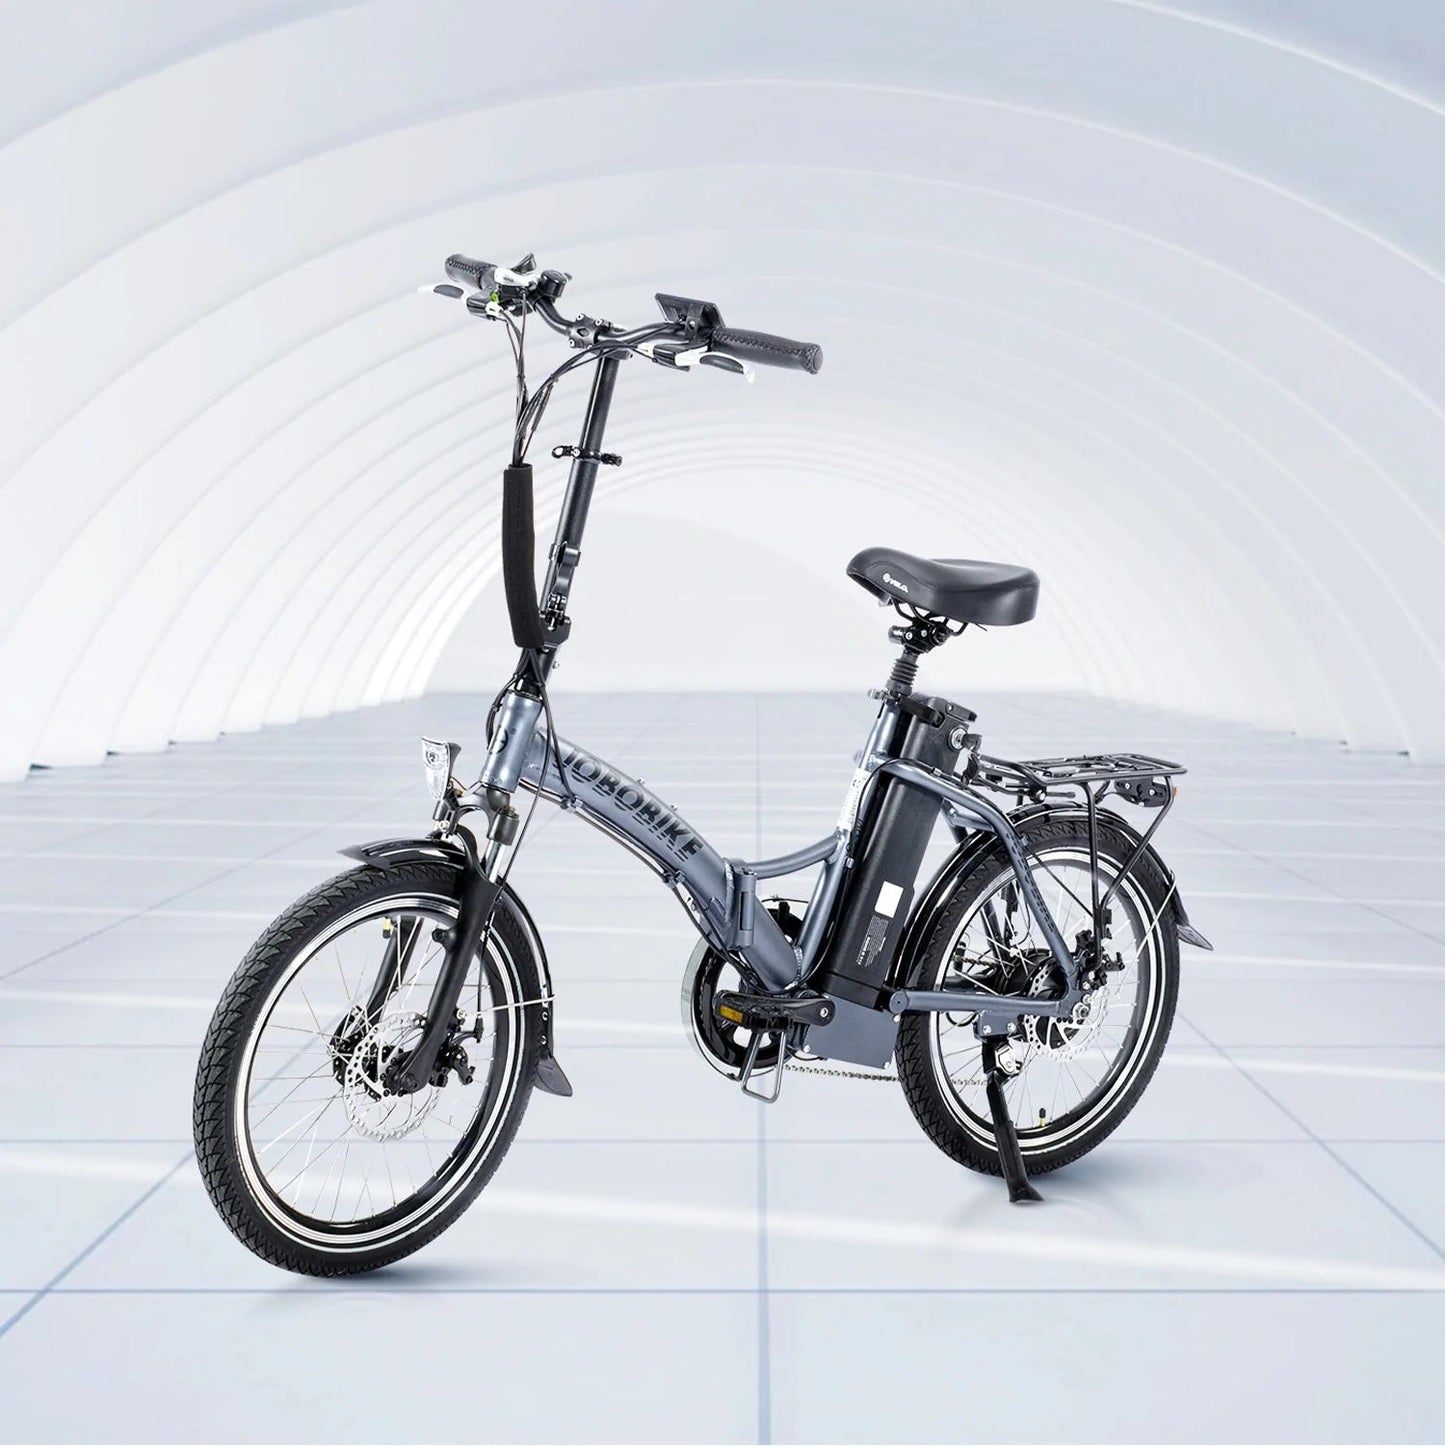 JOBOBIKE Sam e-bike Shimano 7 speed freewheel 11-28T 20 inch